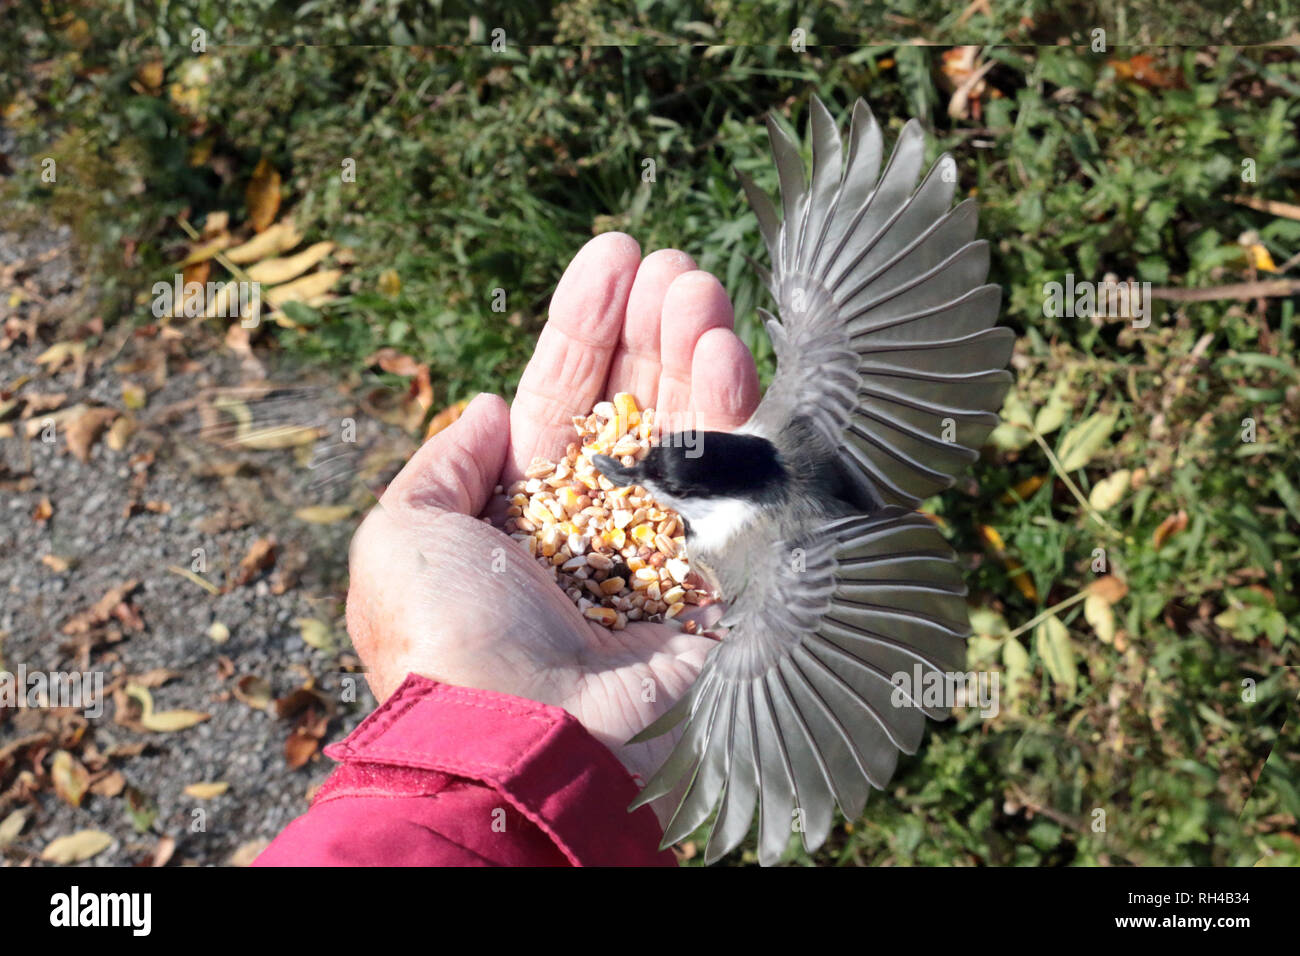 Feeding Chickadee by hand Stock Photo